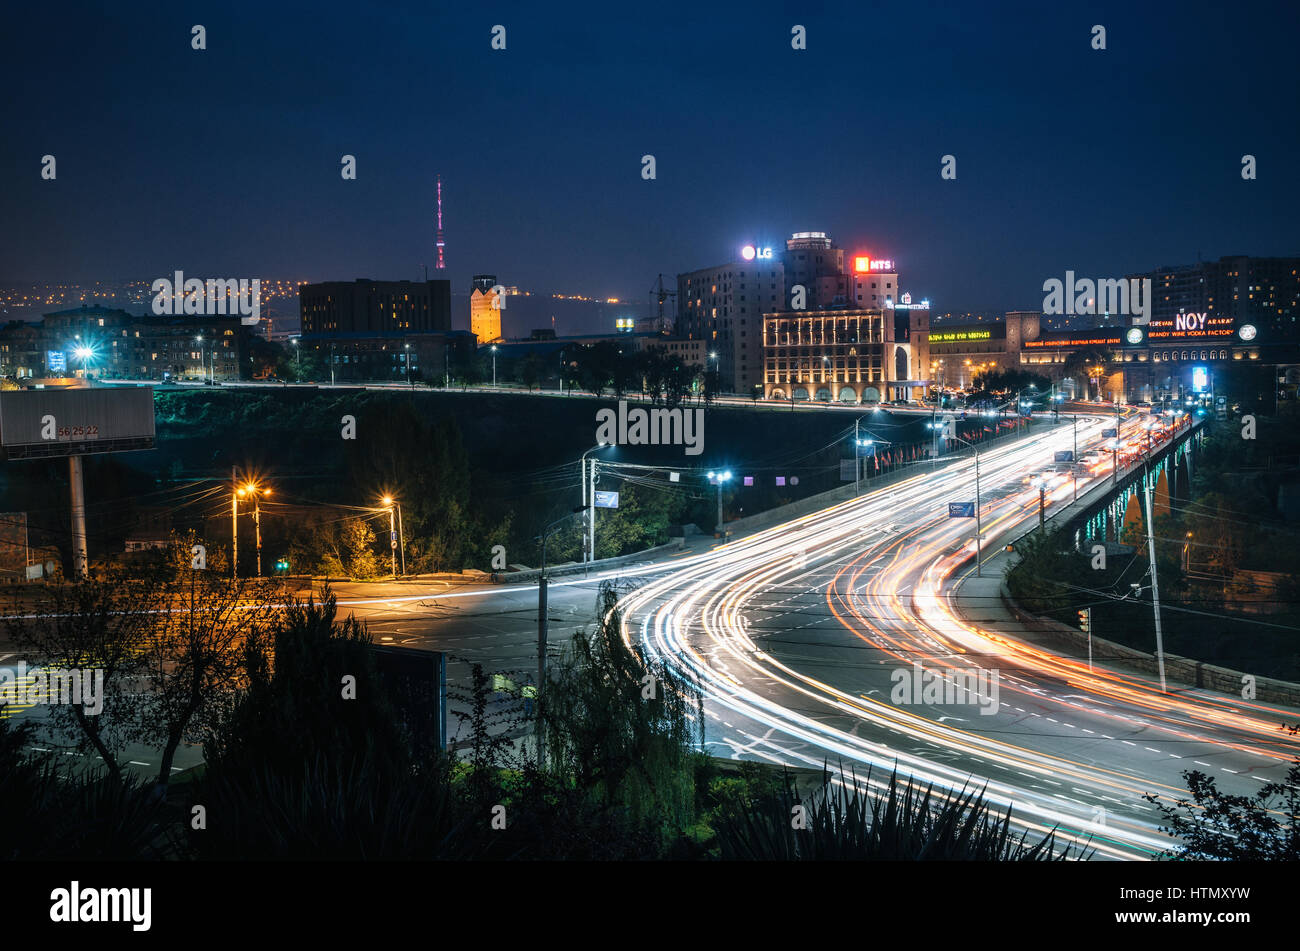 Yerevan, Armenia - October 24, 2016: Night view of The Victory Bridge or Haghtanak Bridge illuminated against Yerevan Ararat Brandy-Wine-Vodka Factory Stock Photo